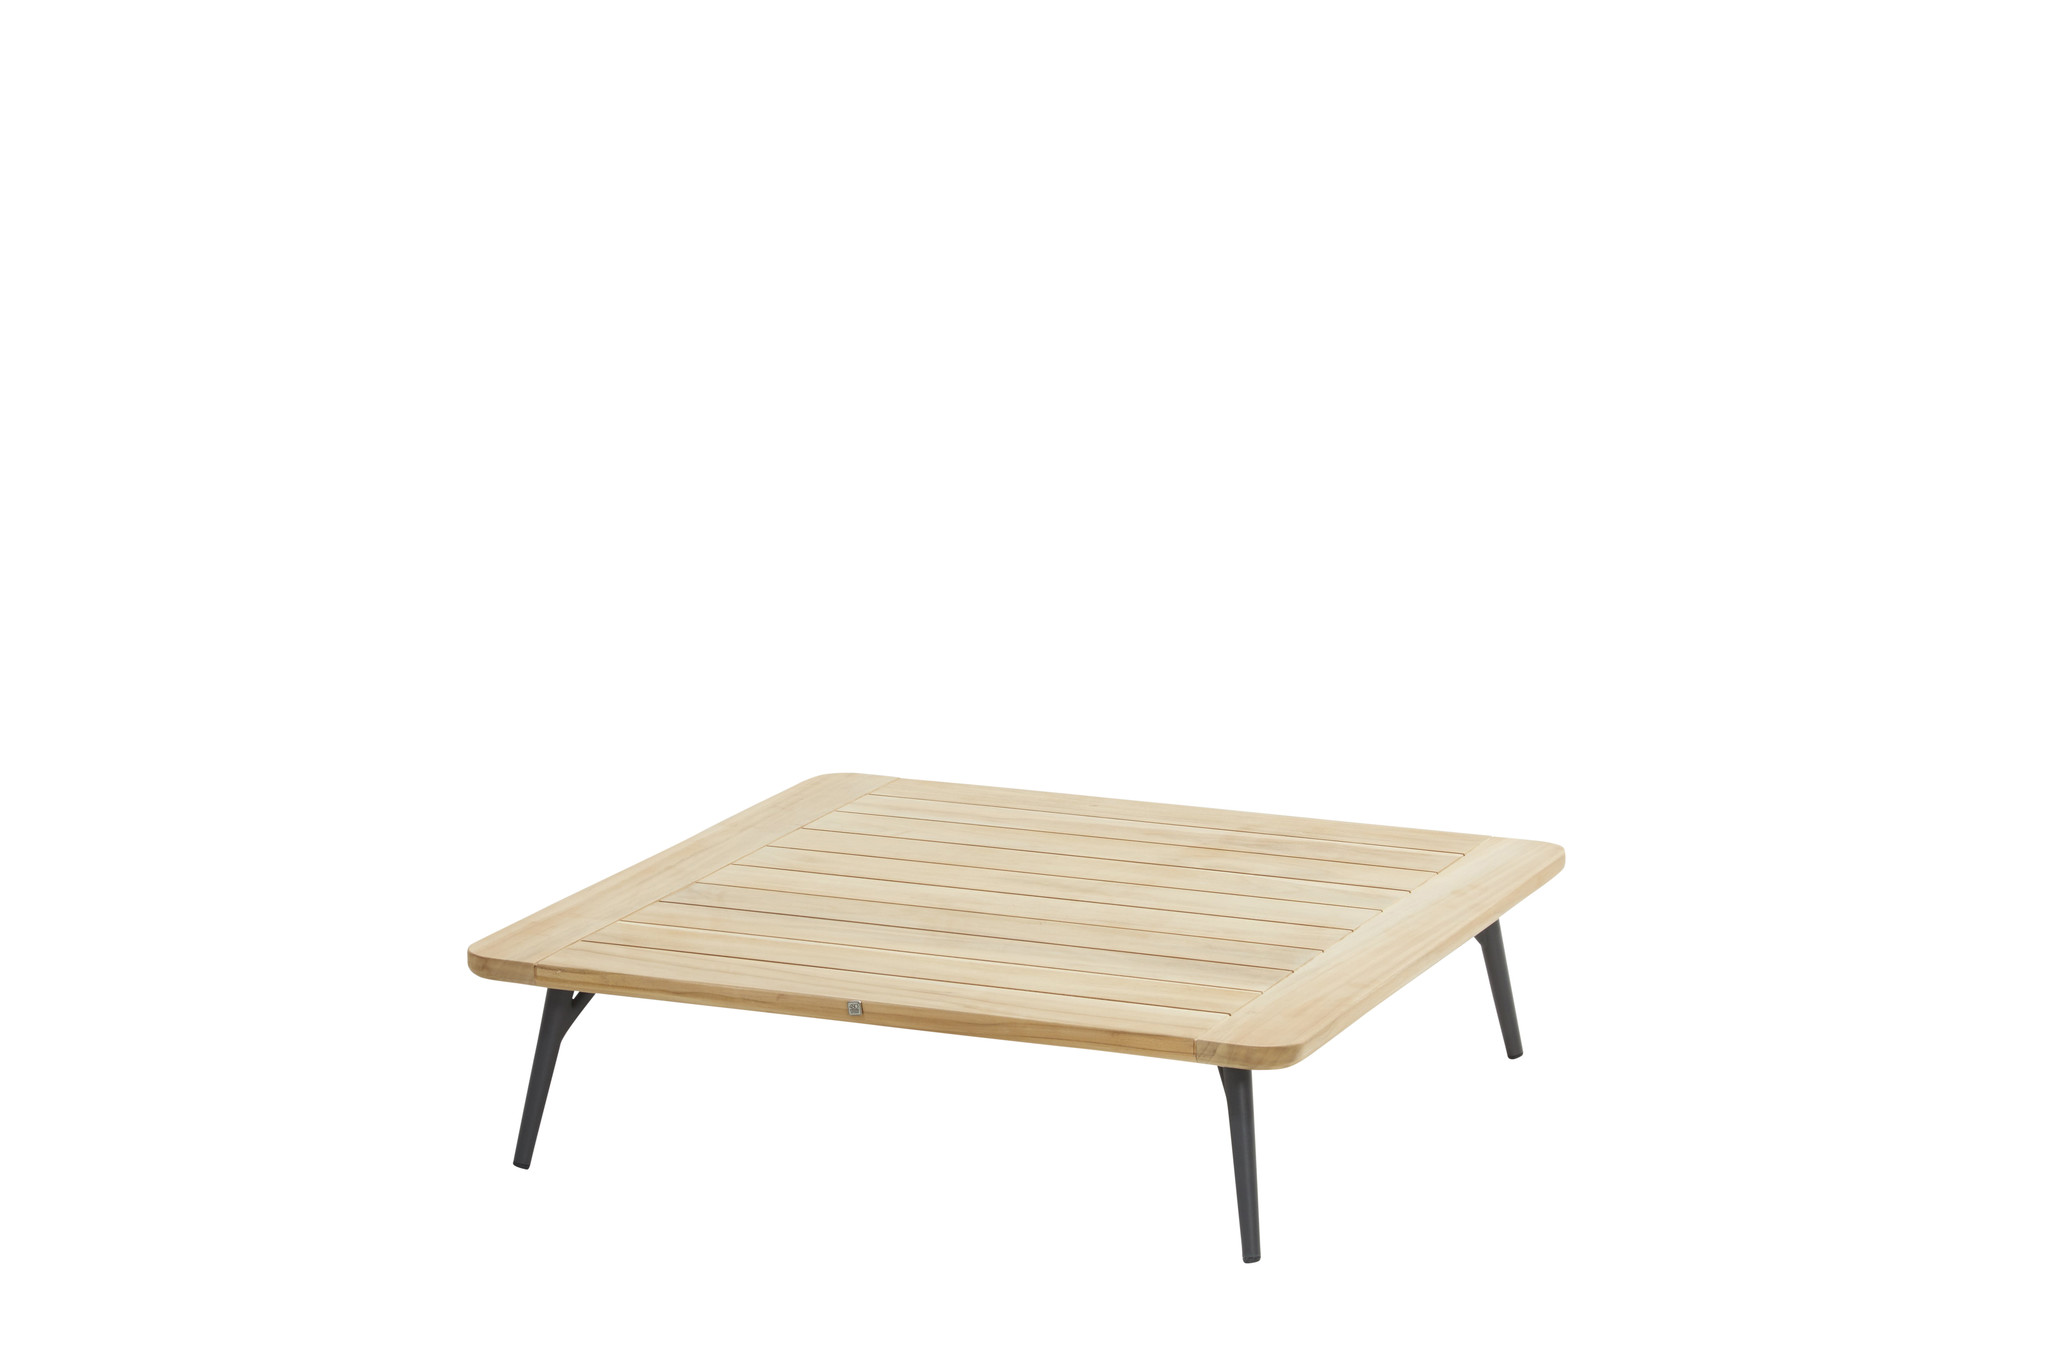 - mattress chair | | gascylinders Positano 4 outdoor Springbed | living furniture Seasons Outdoor